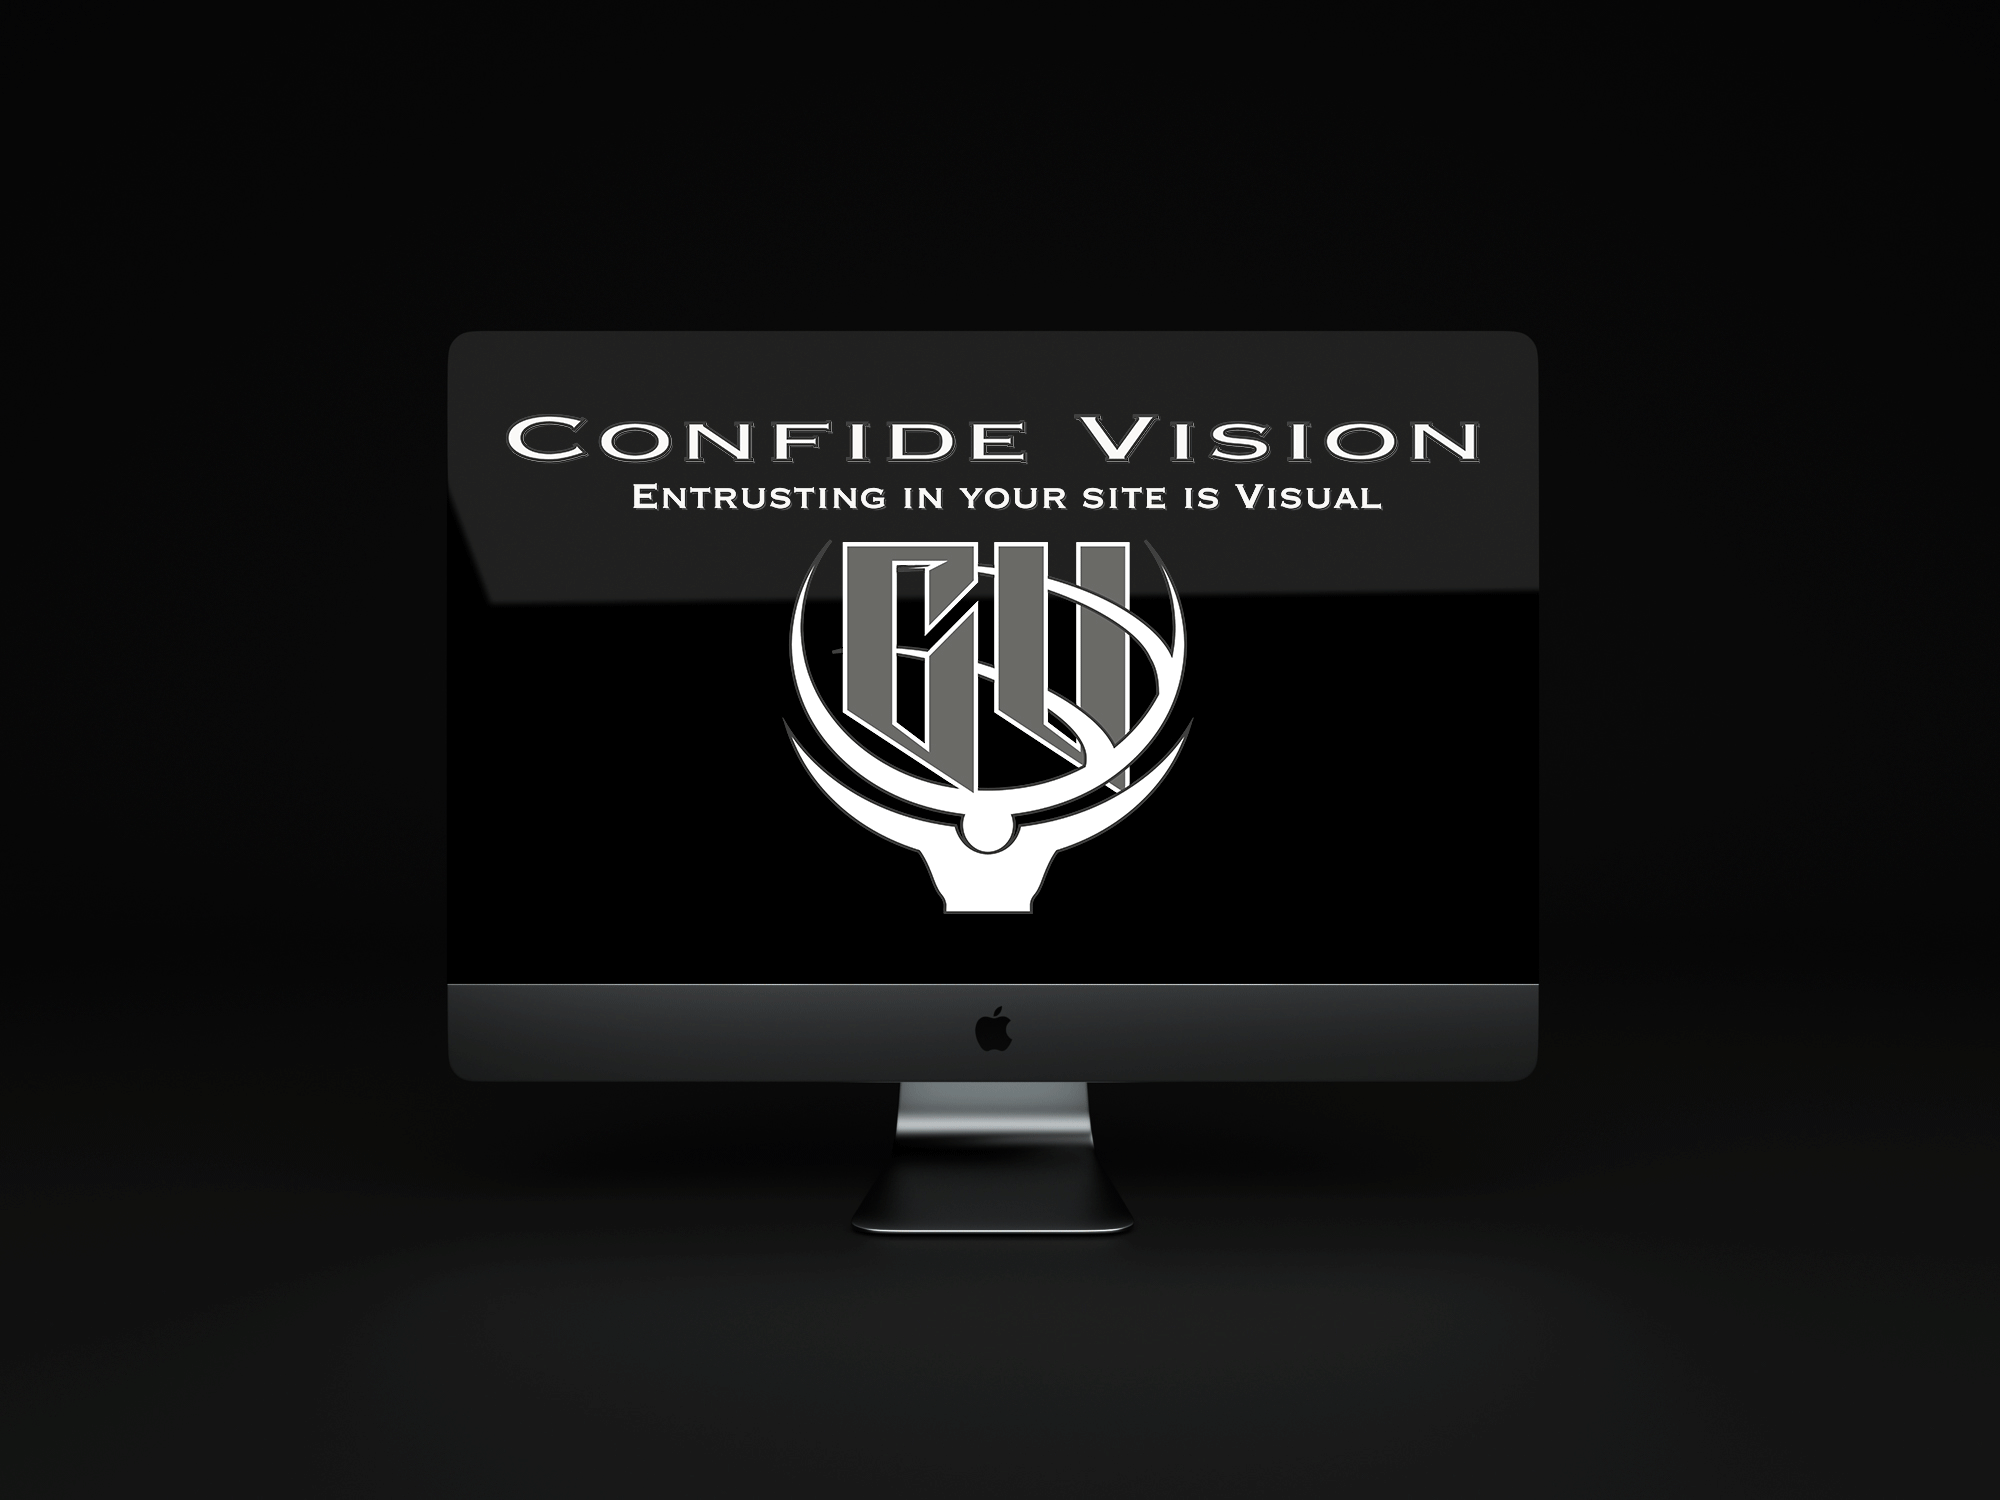 branding your website – confide vision